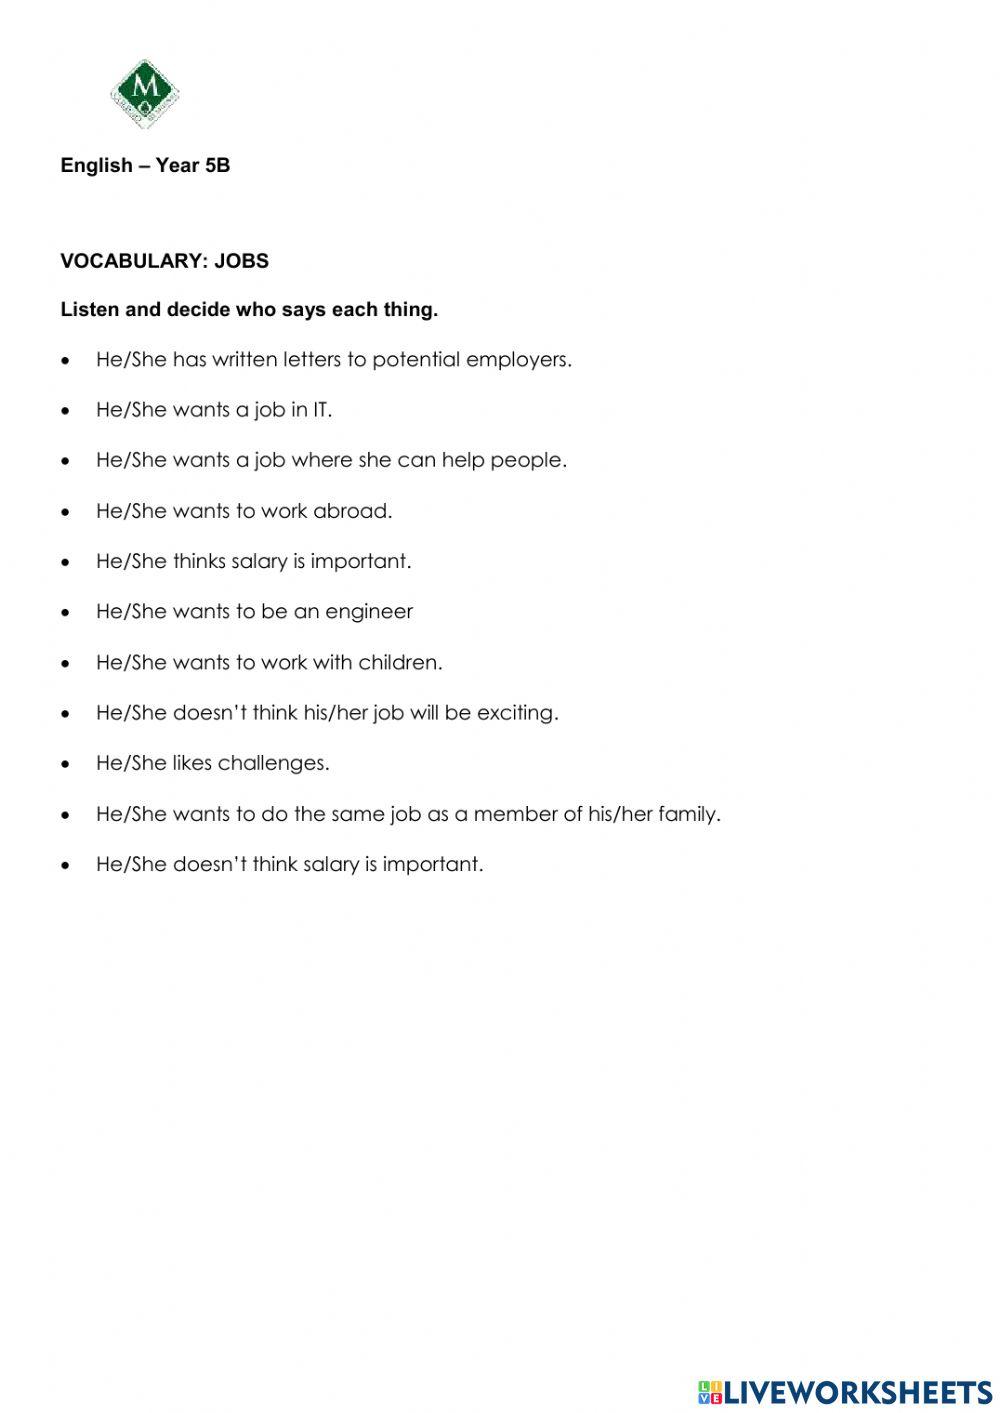 Jobs. Modal verbs. Present perfect.